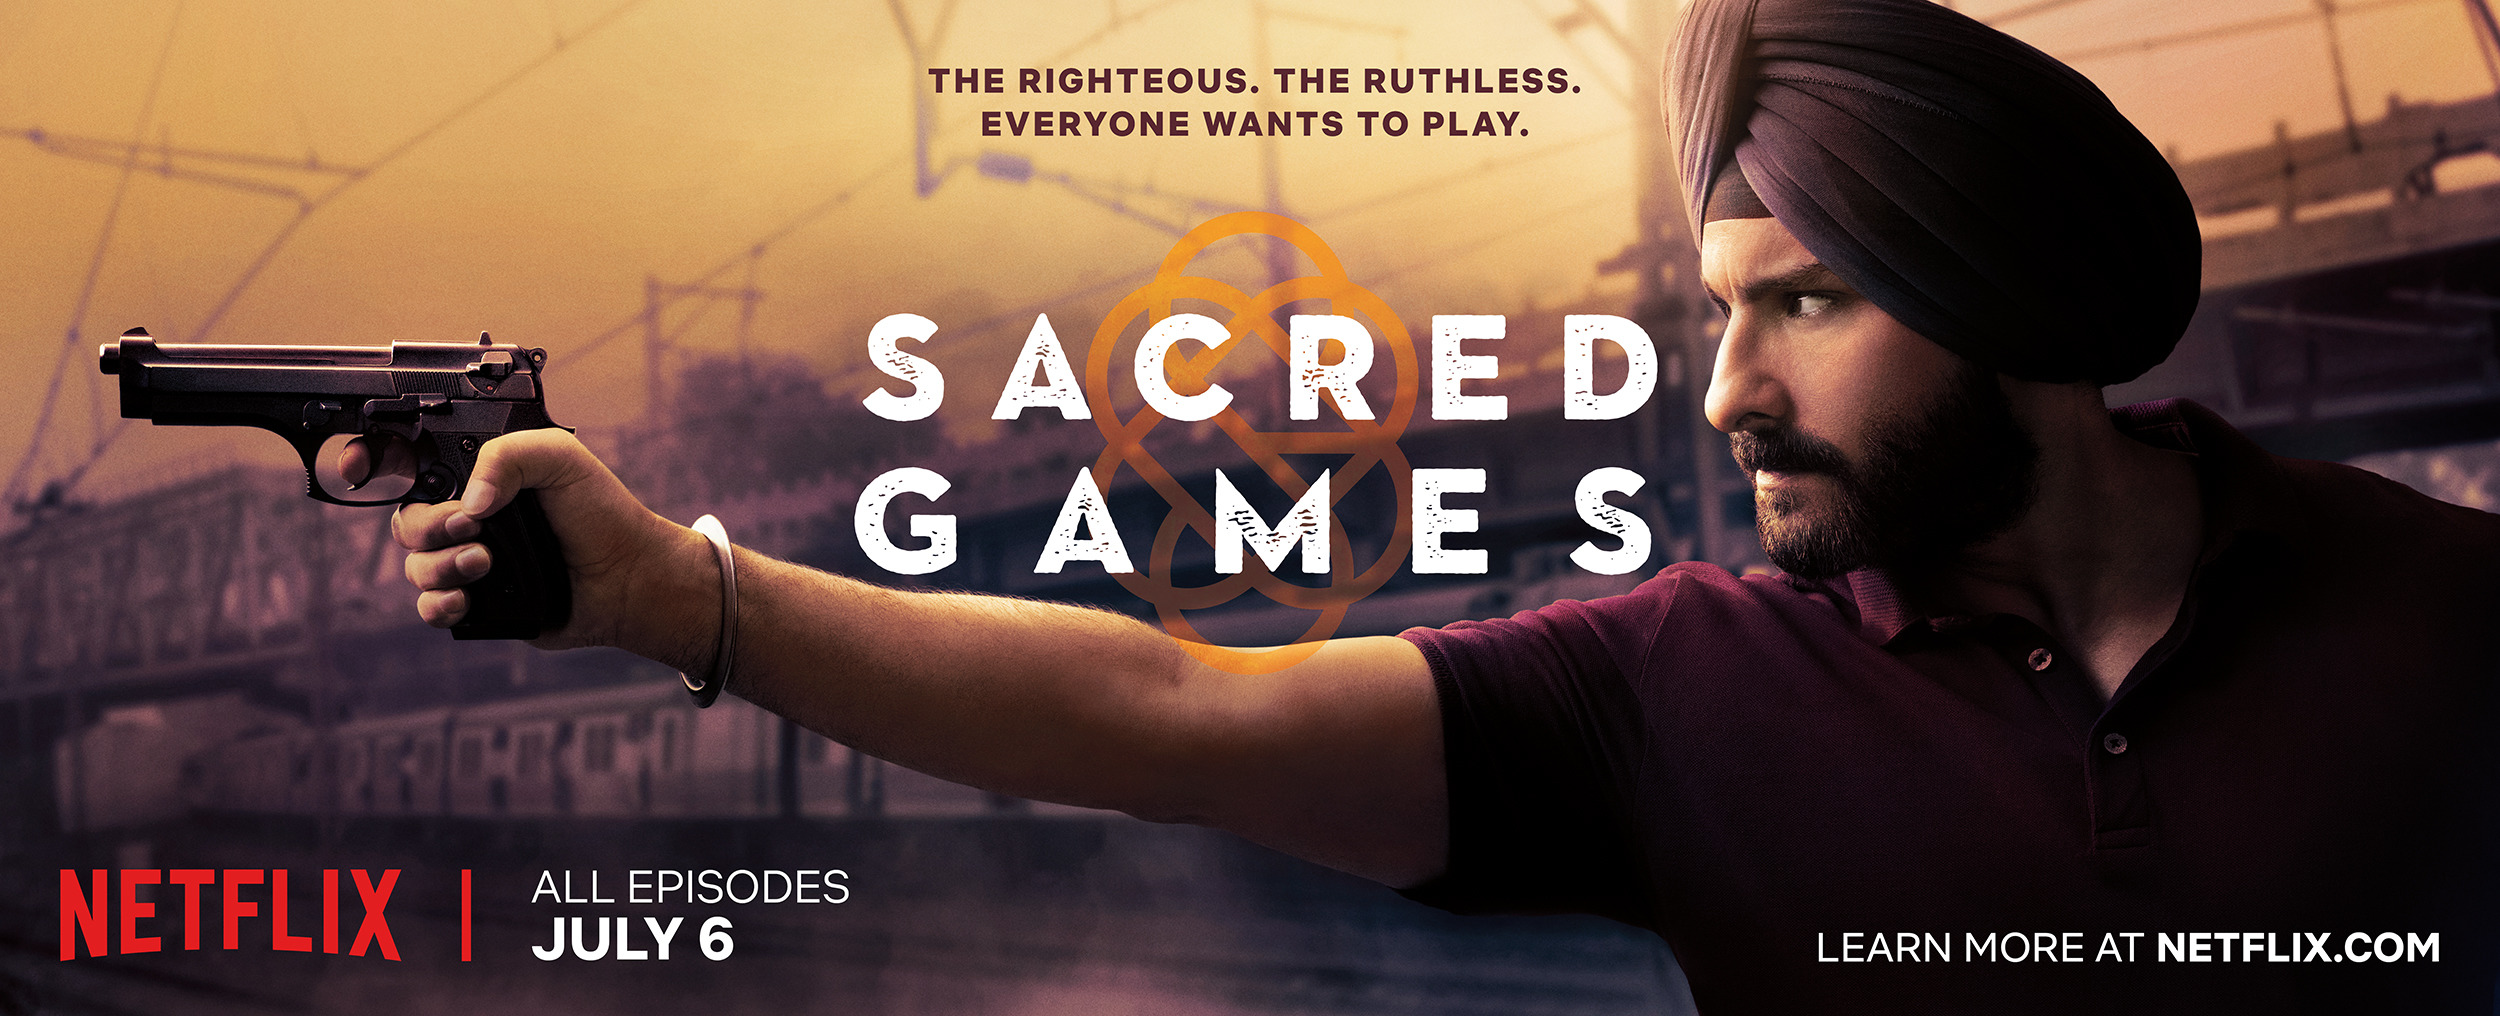 Mega Sized TV Poster Image for Sacred Games (#12 of 20)